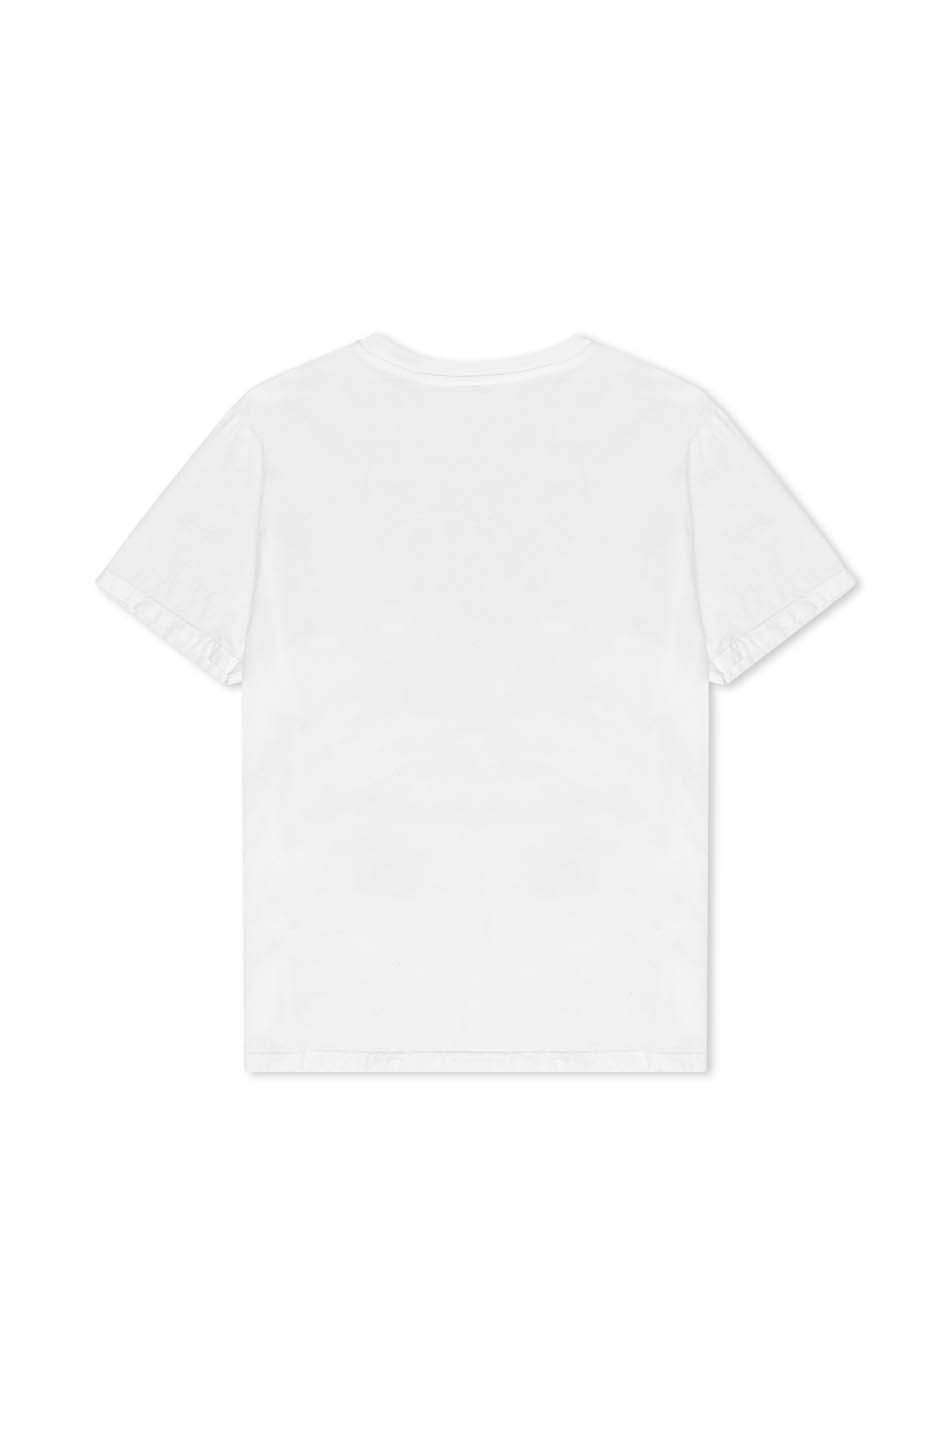 Washed Dark People White T-shirt